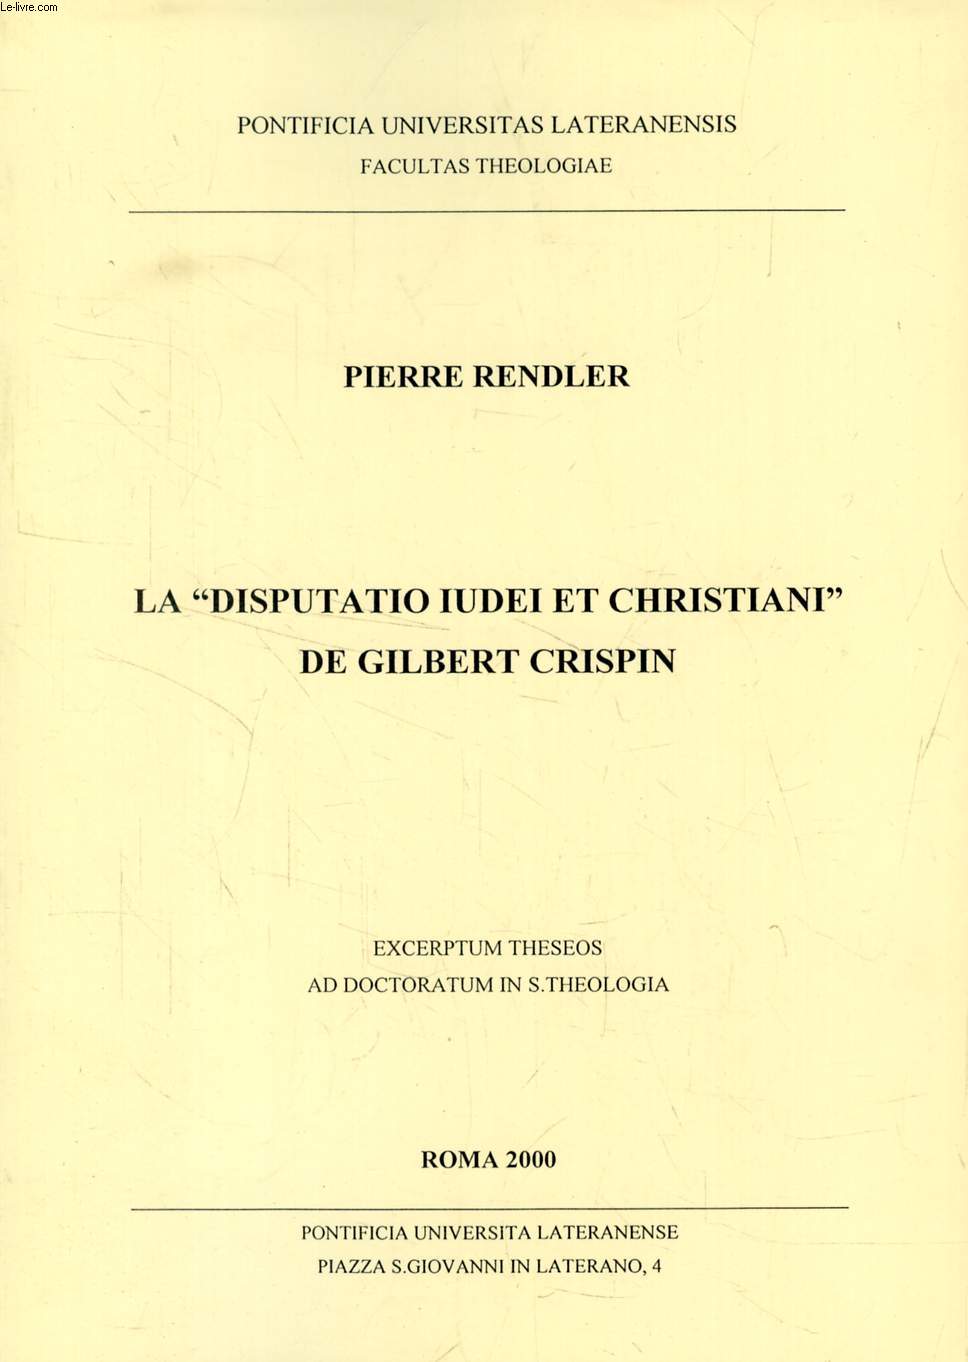 LA 'DISPUTATIO IUDEI ET CHRISTIANI' DE GILBERT CRISPIN (EXCERPTUM THESEOS)